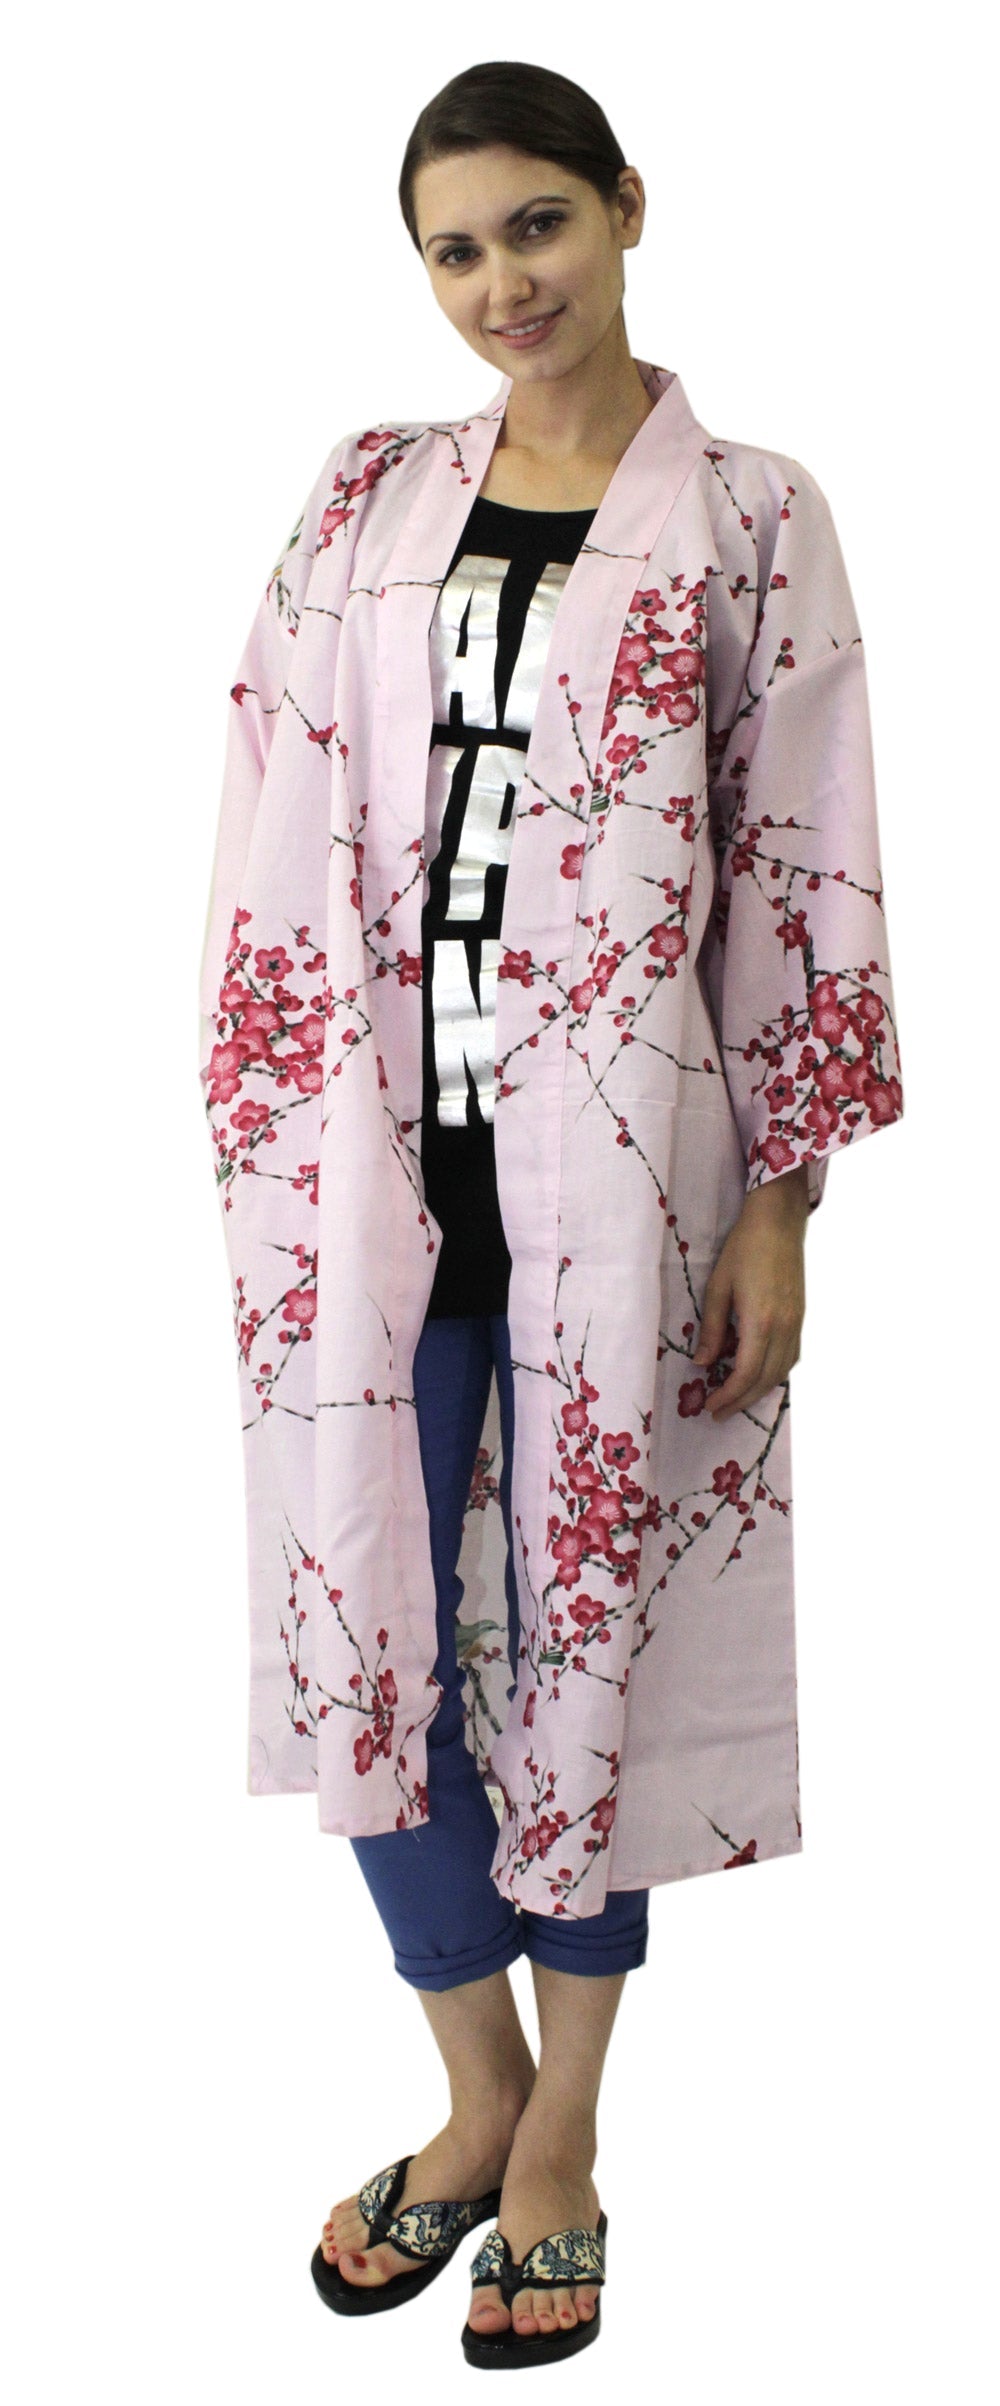 Women's Happi Coat: Kimono Robe - Plum & Bush Warbler Pink